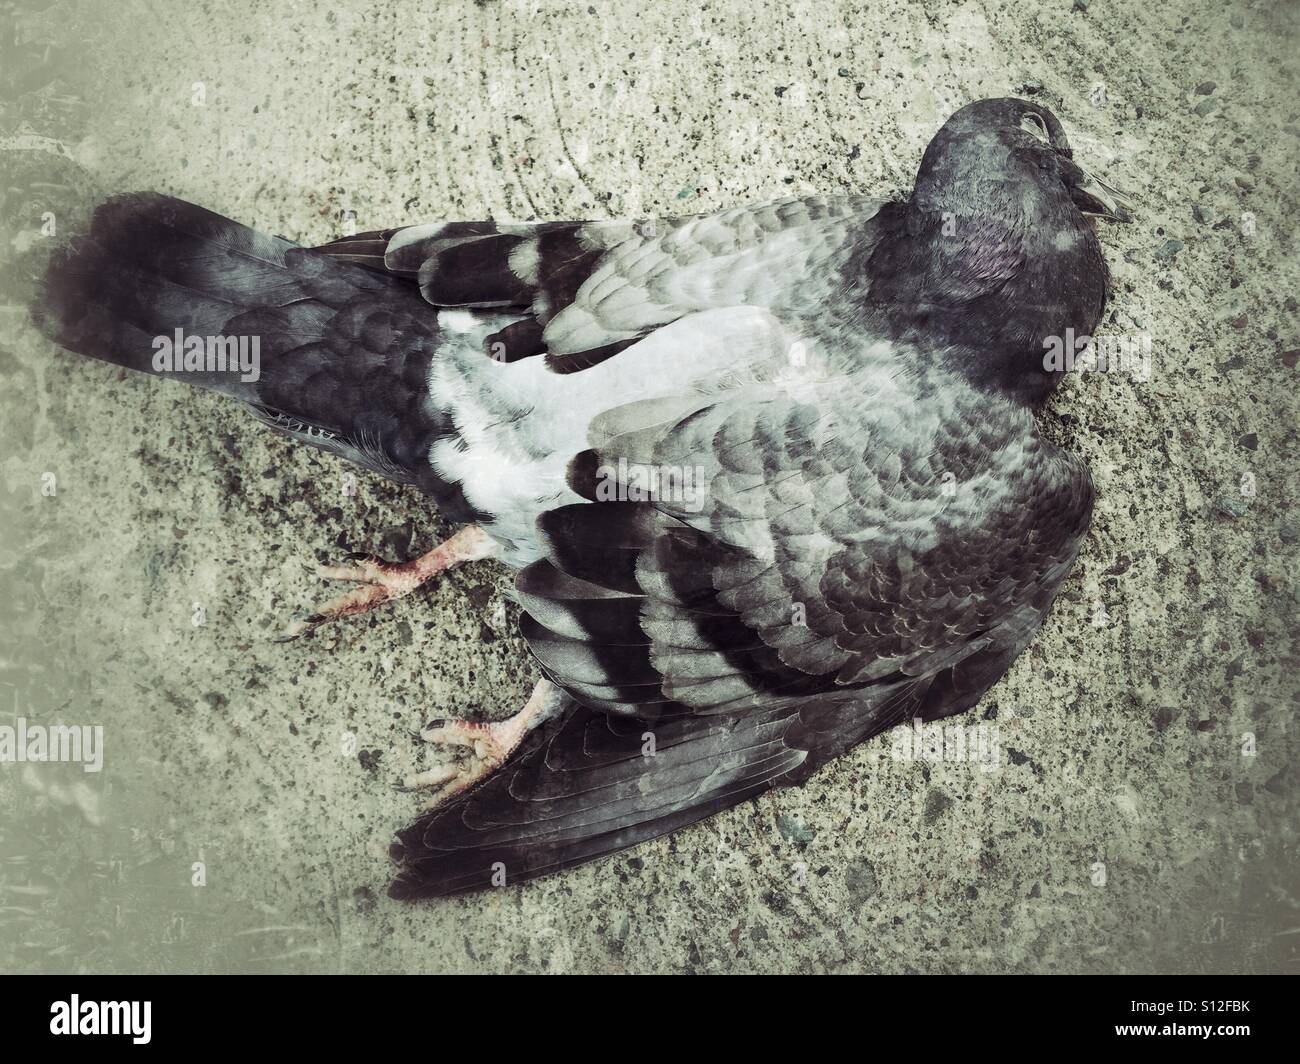 A pigeon found dead on a city sidewalk. Stock Photo